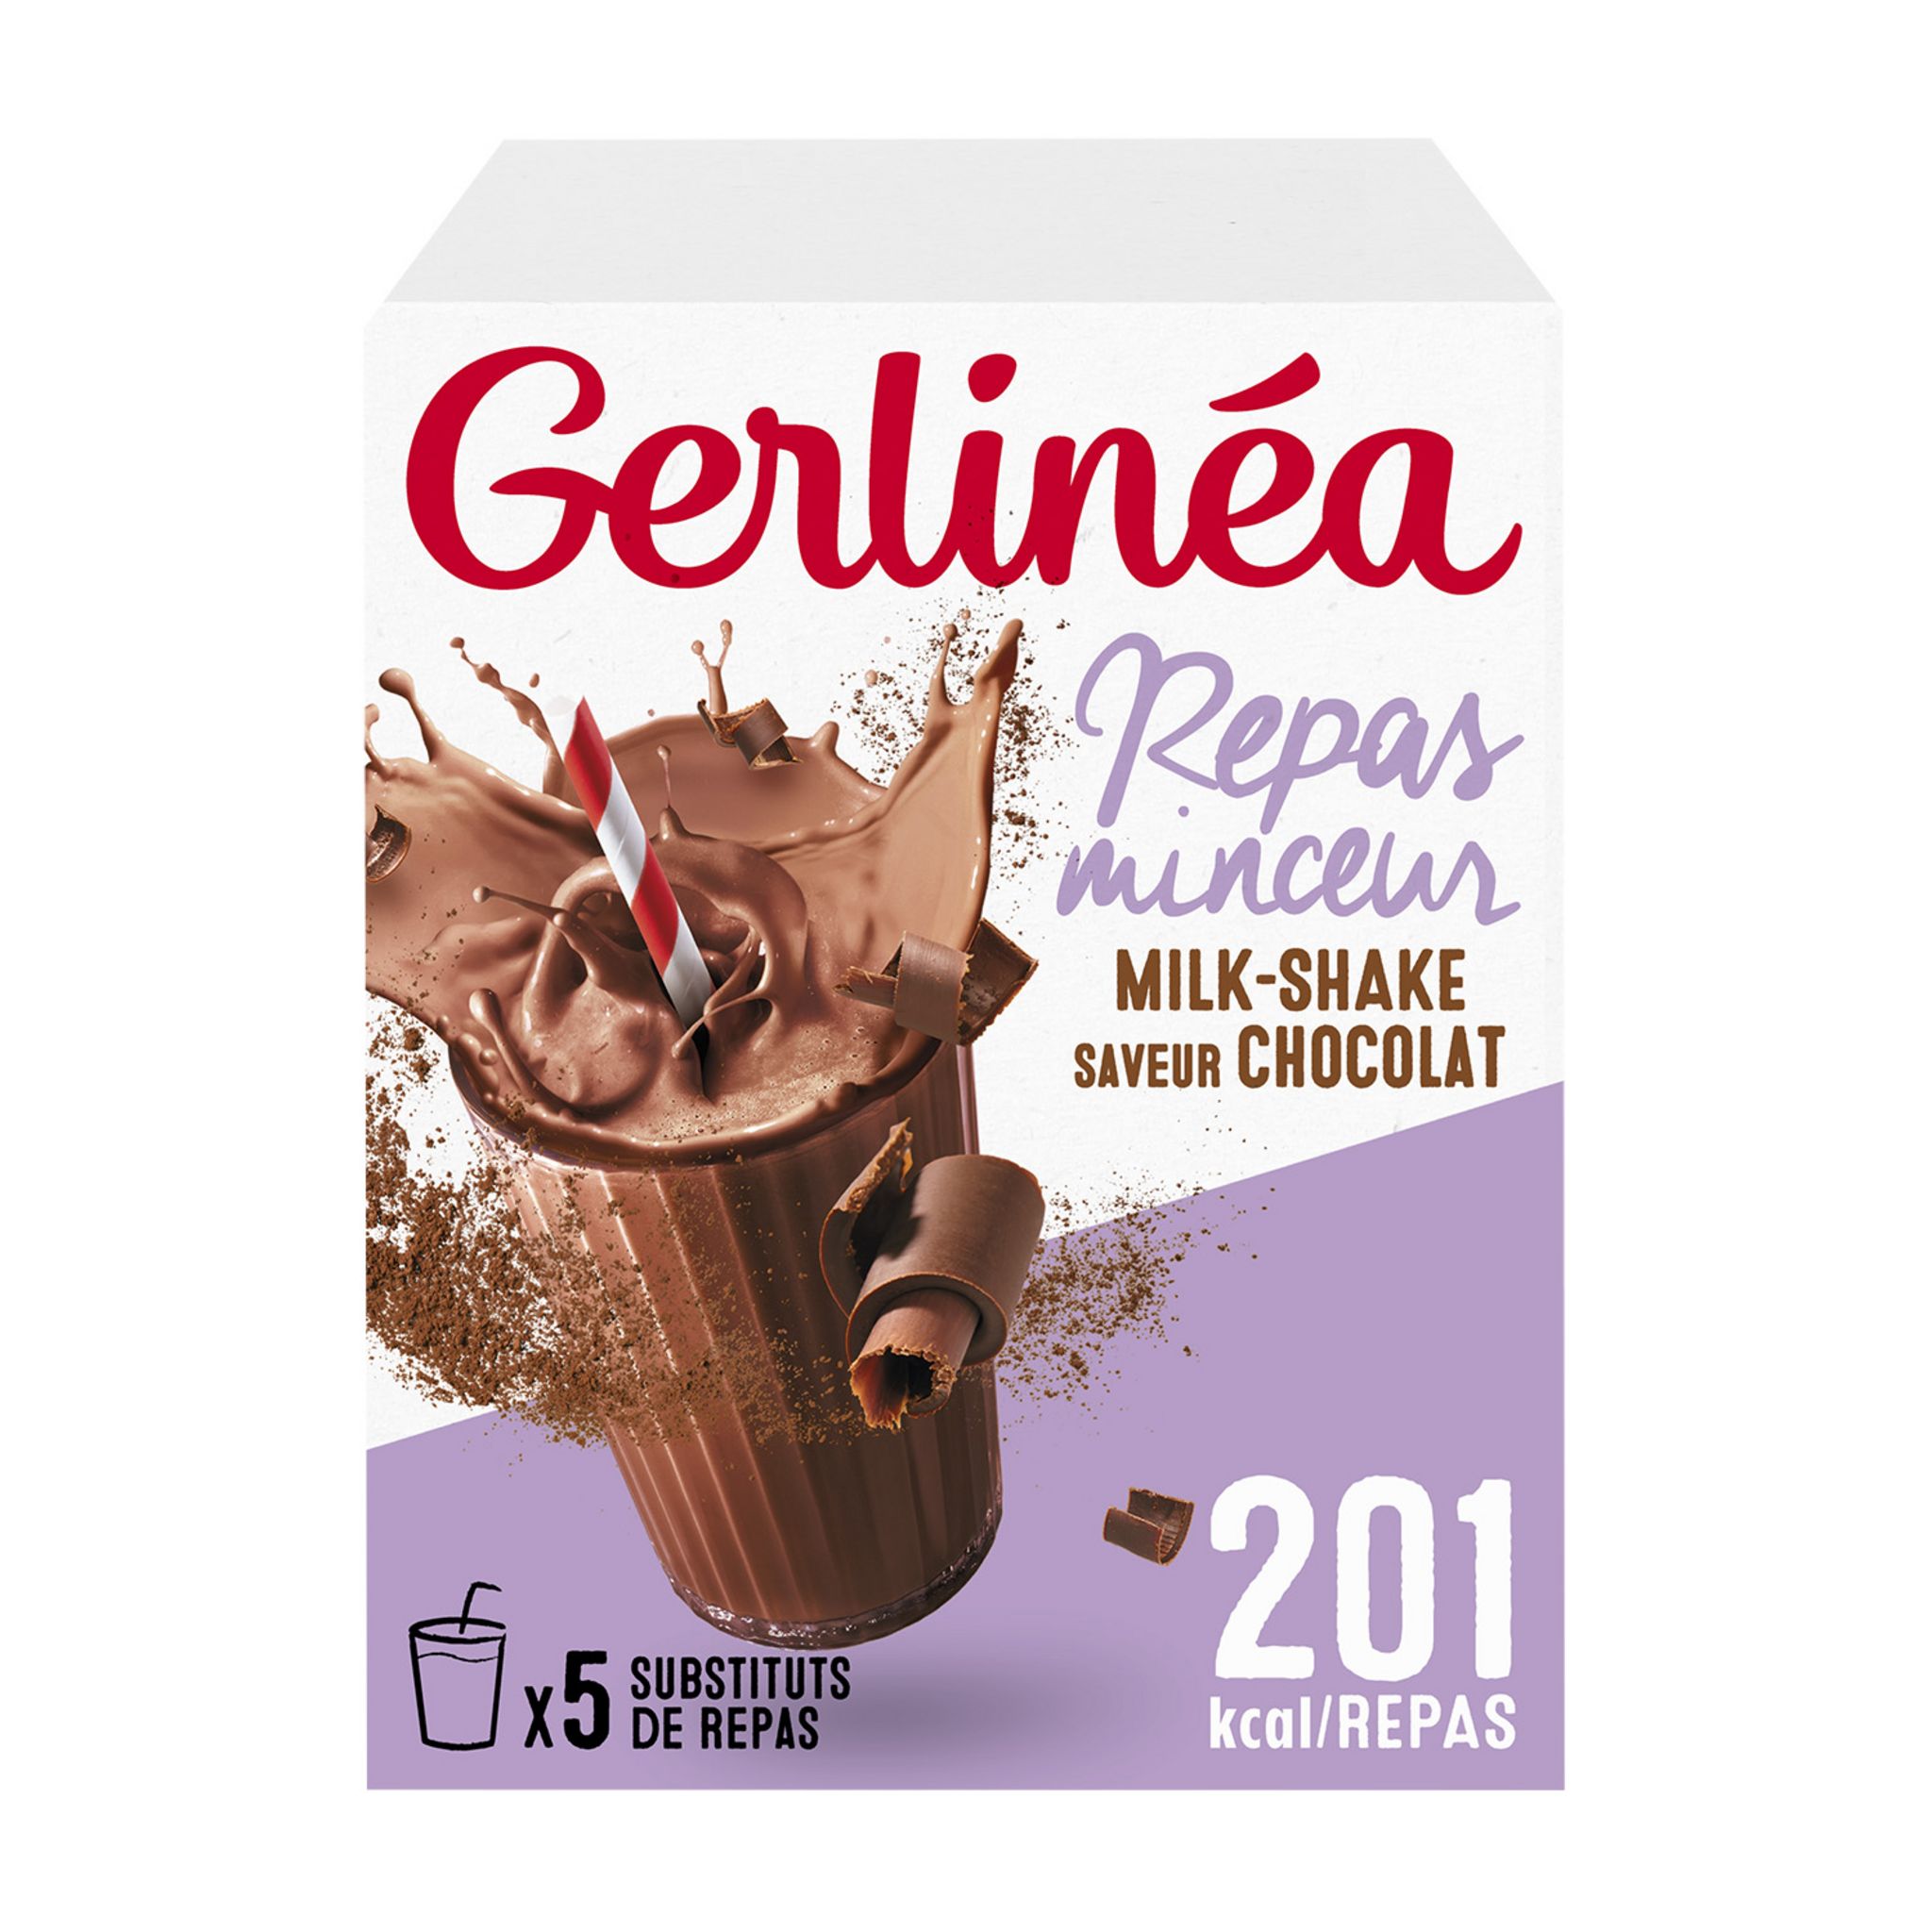 Gerlinéa Milkshake gerlinéa - En promotion chez Carrefour